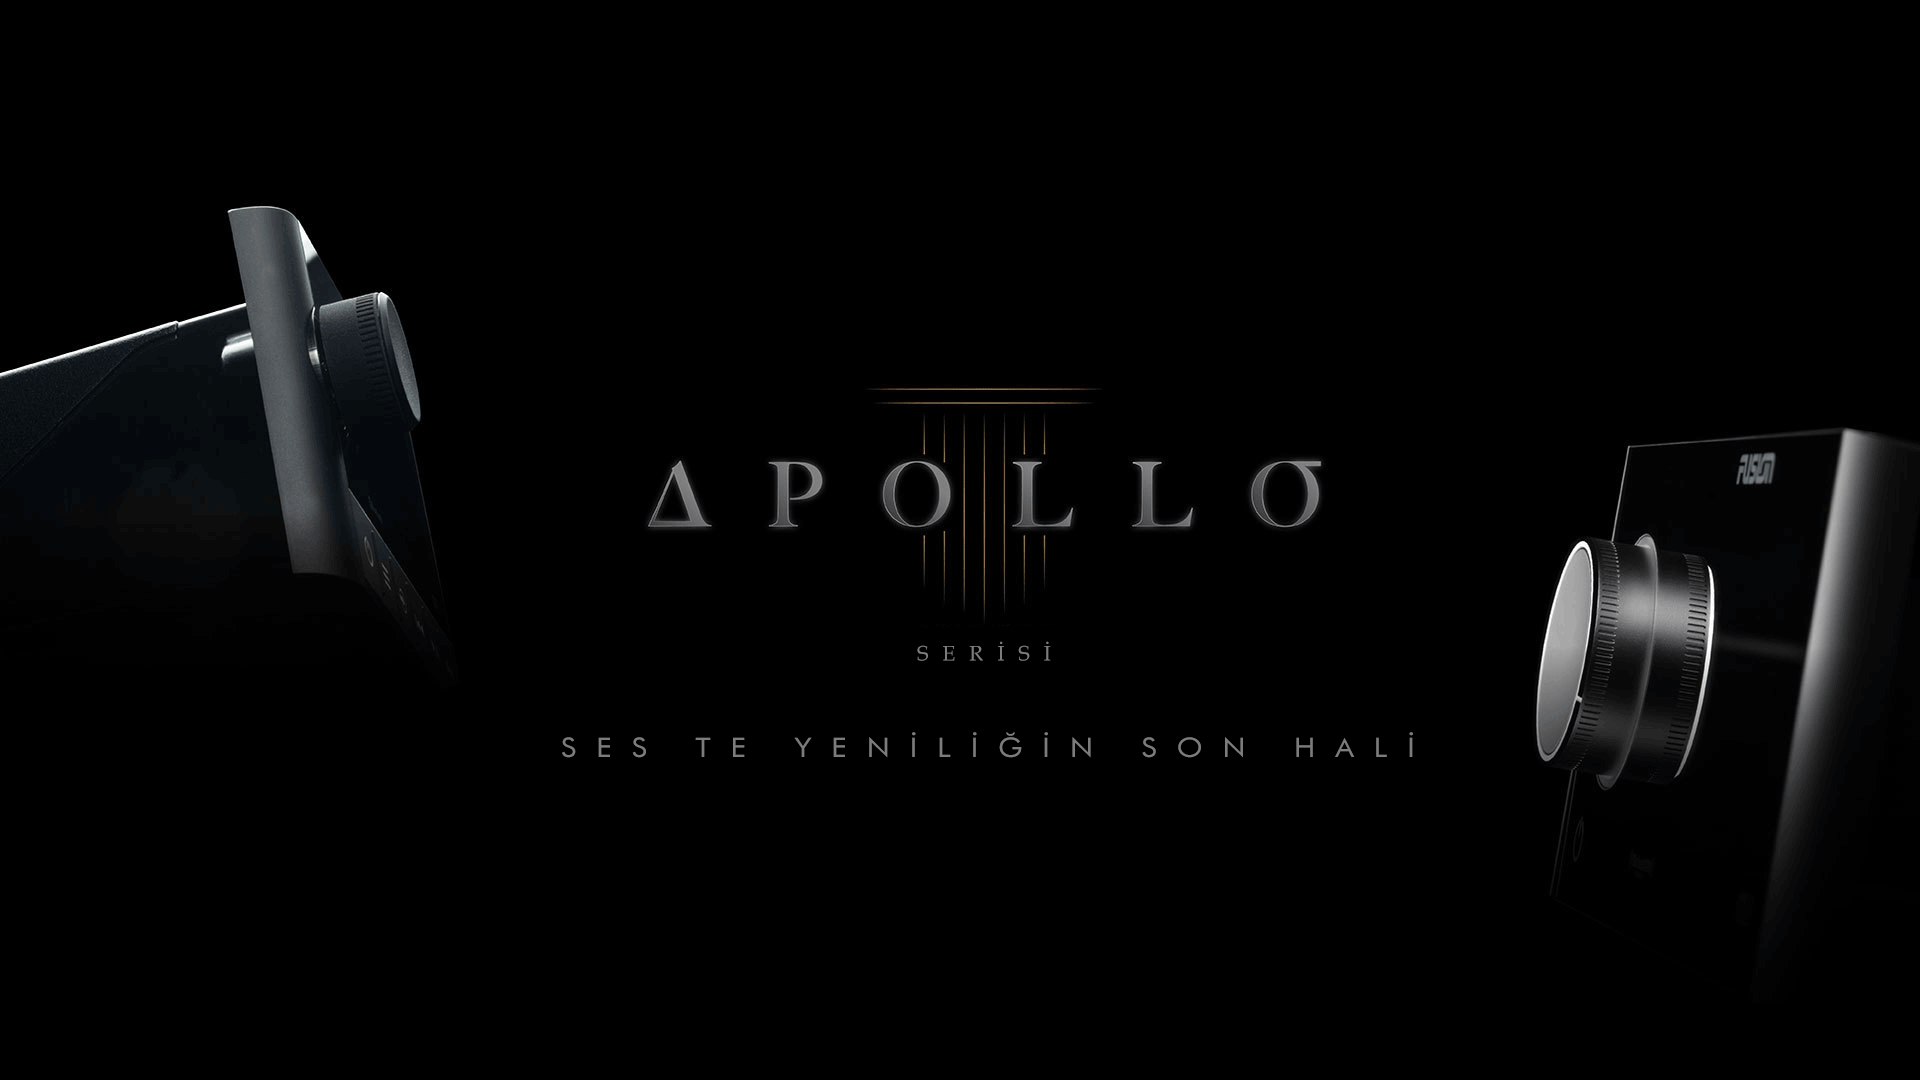 Apollo RA770